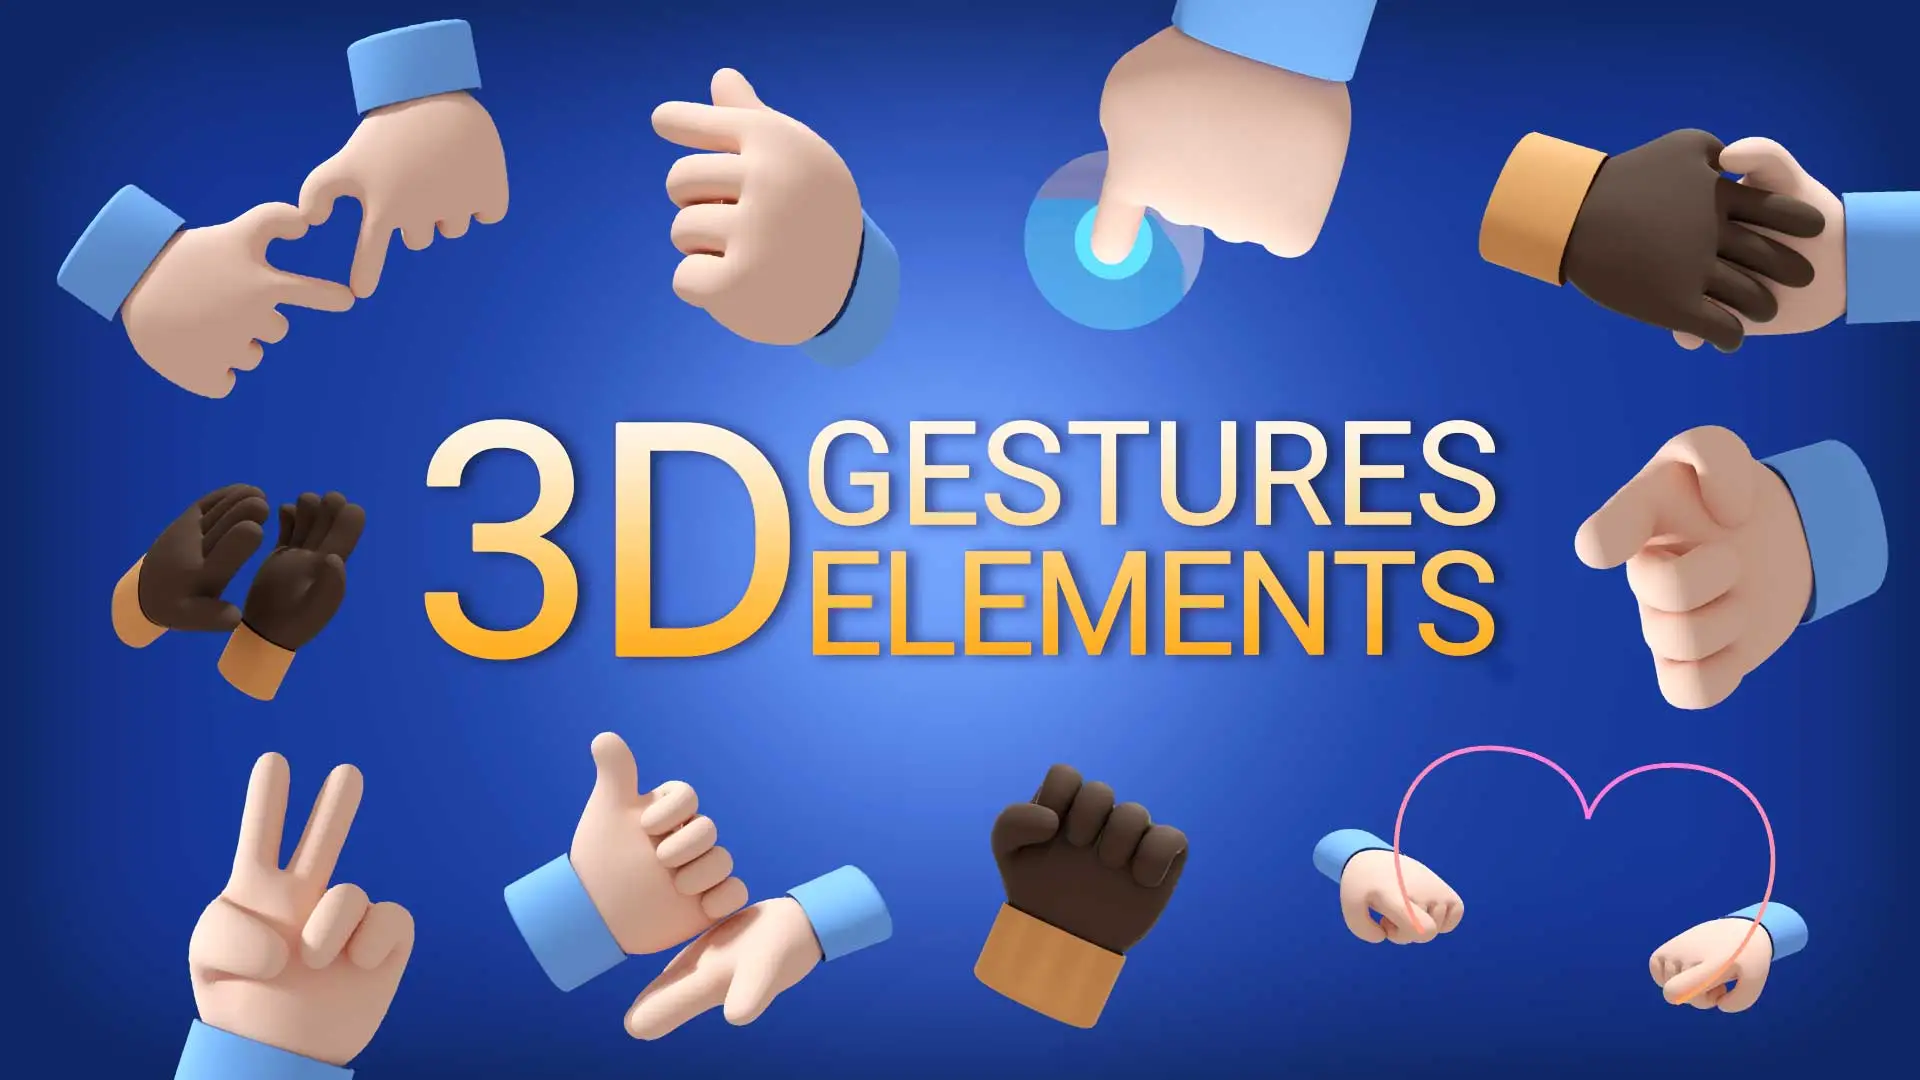 3D Gestures Elements